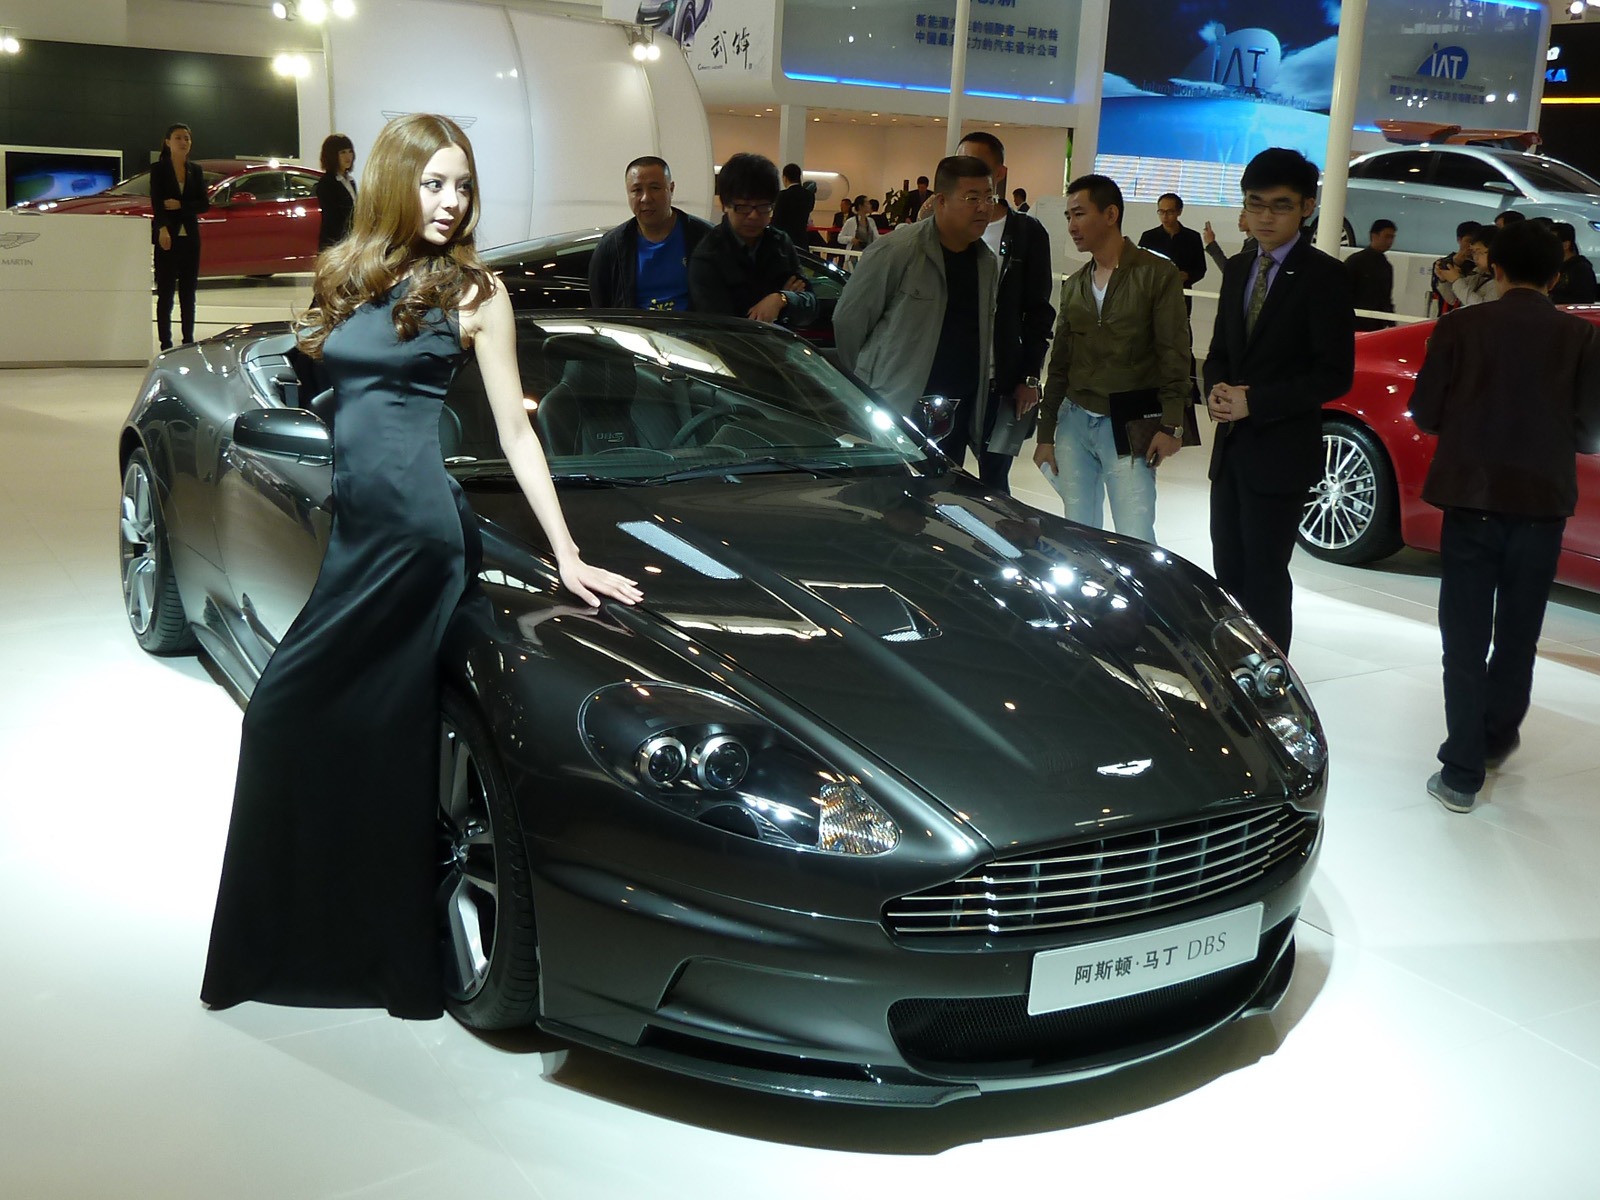 2010 Beijing Auto Show (Gemini Dream Works) #2 - 1600x1200